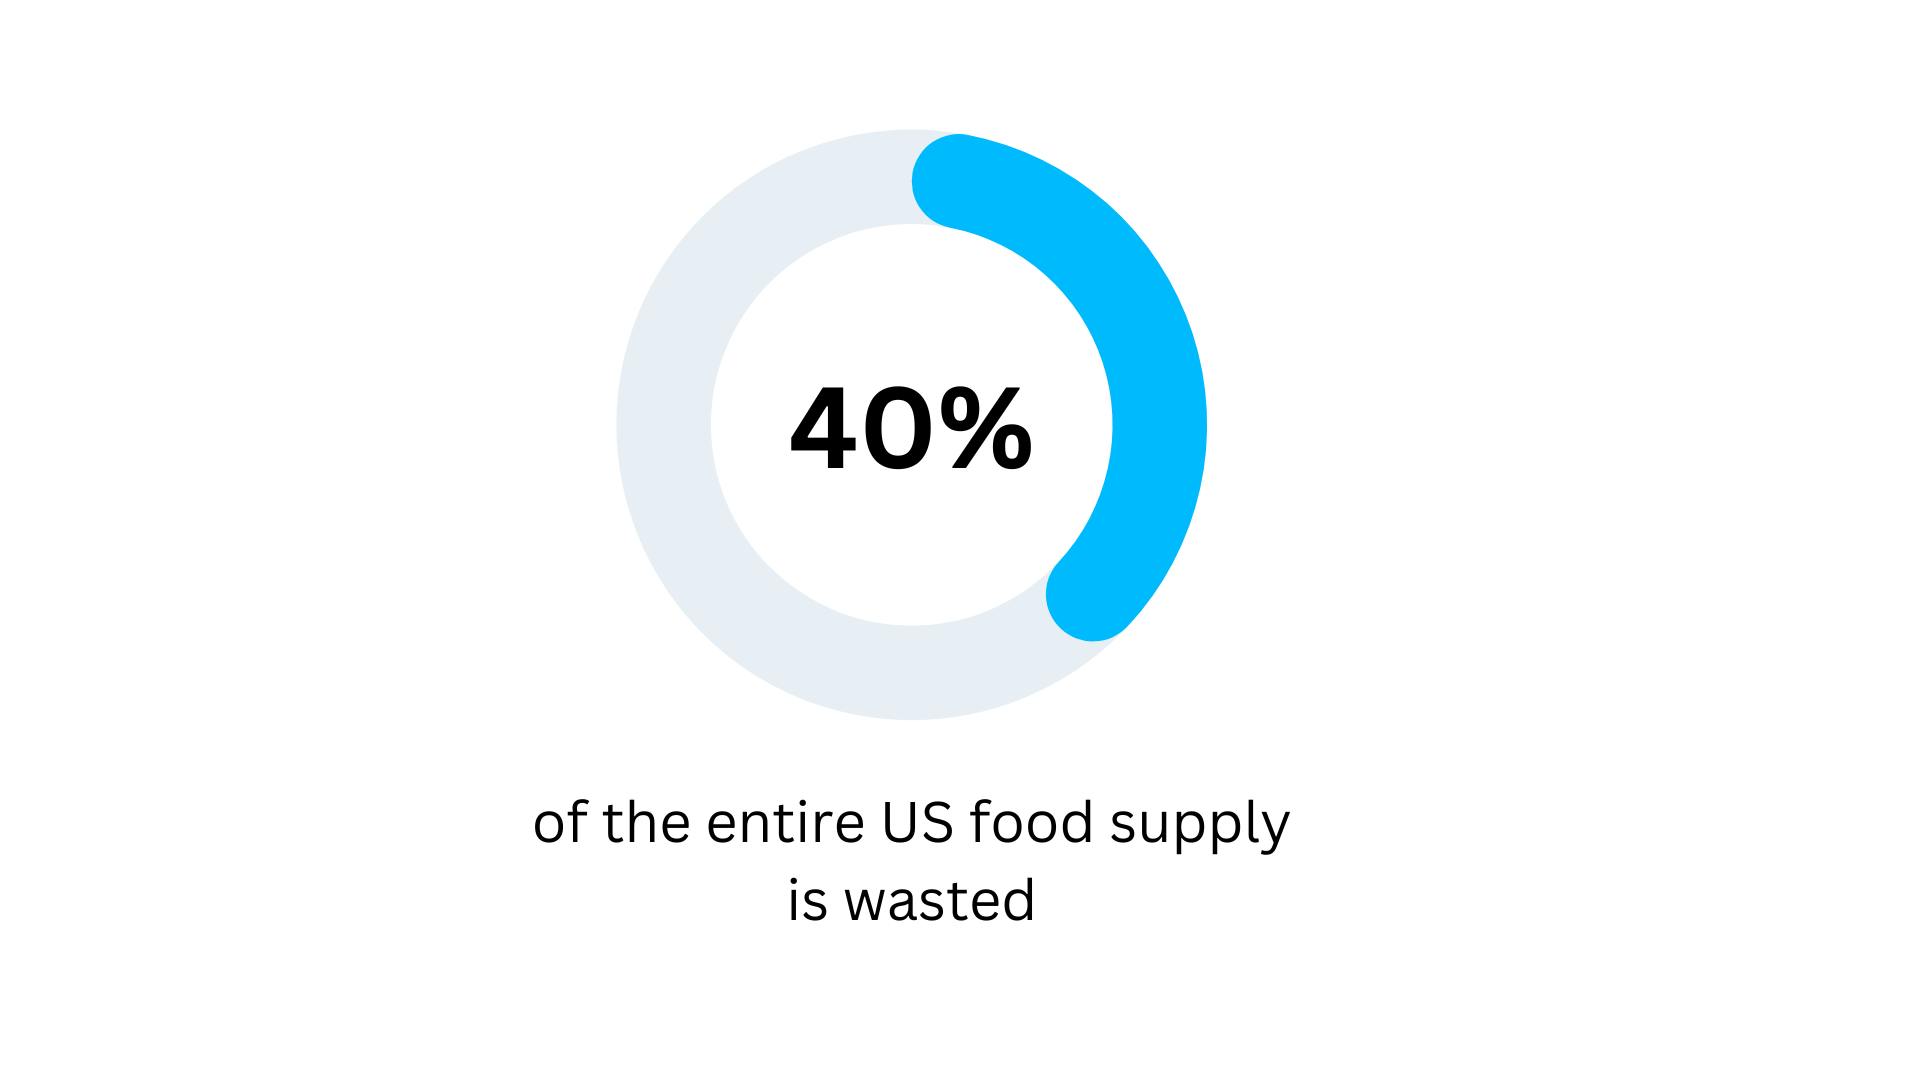 Food waste statistics - Food waste epidemic in the US